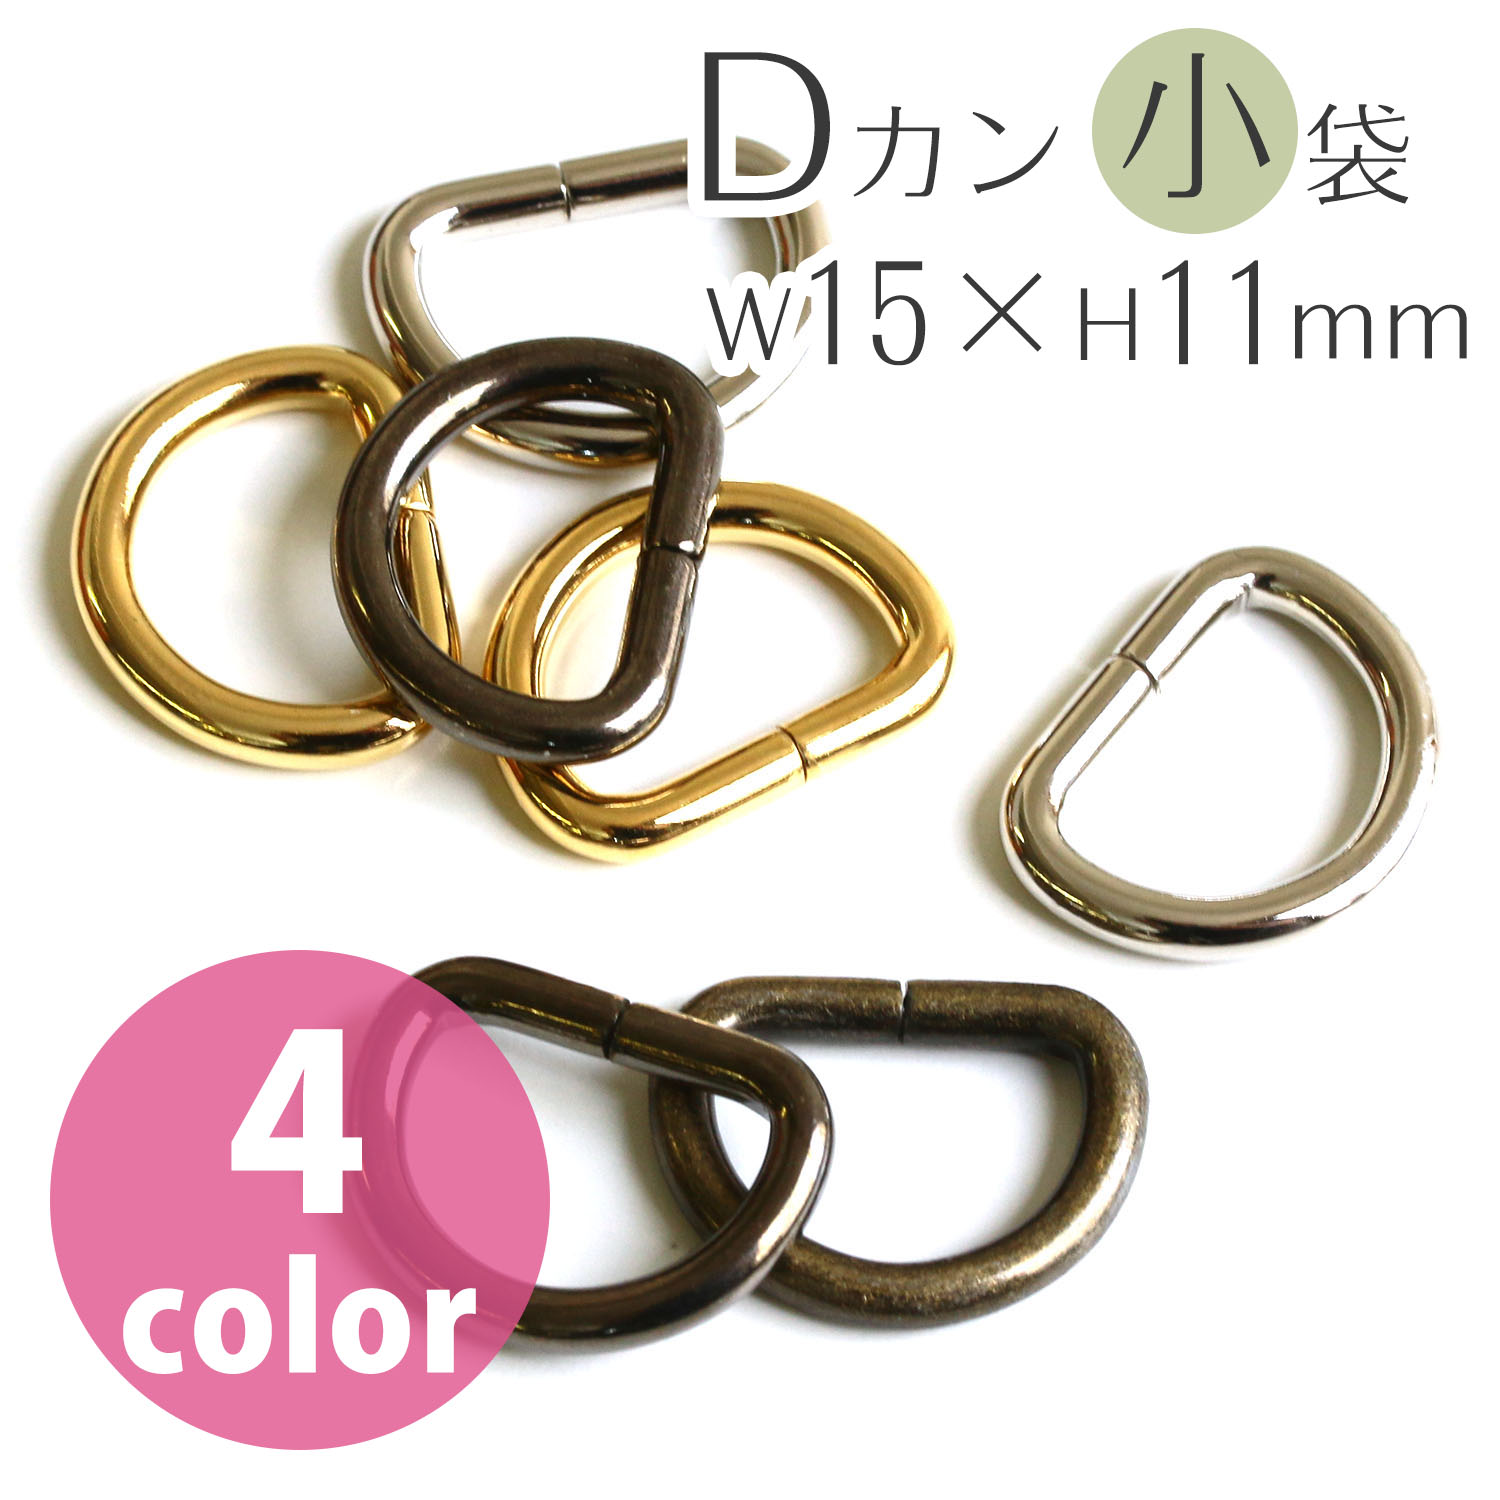 S22 D-Ring 15 x 11mm, diameter 3mm (bag)